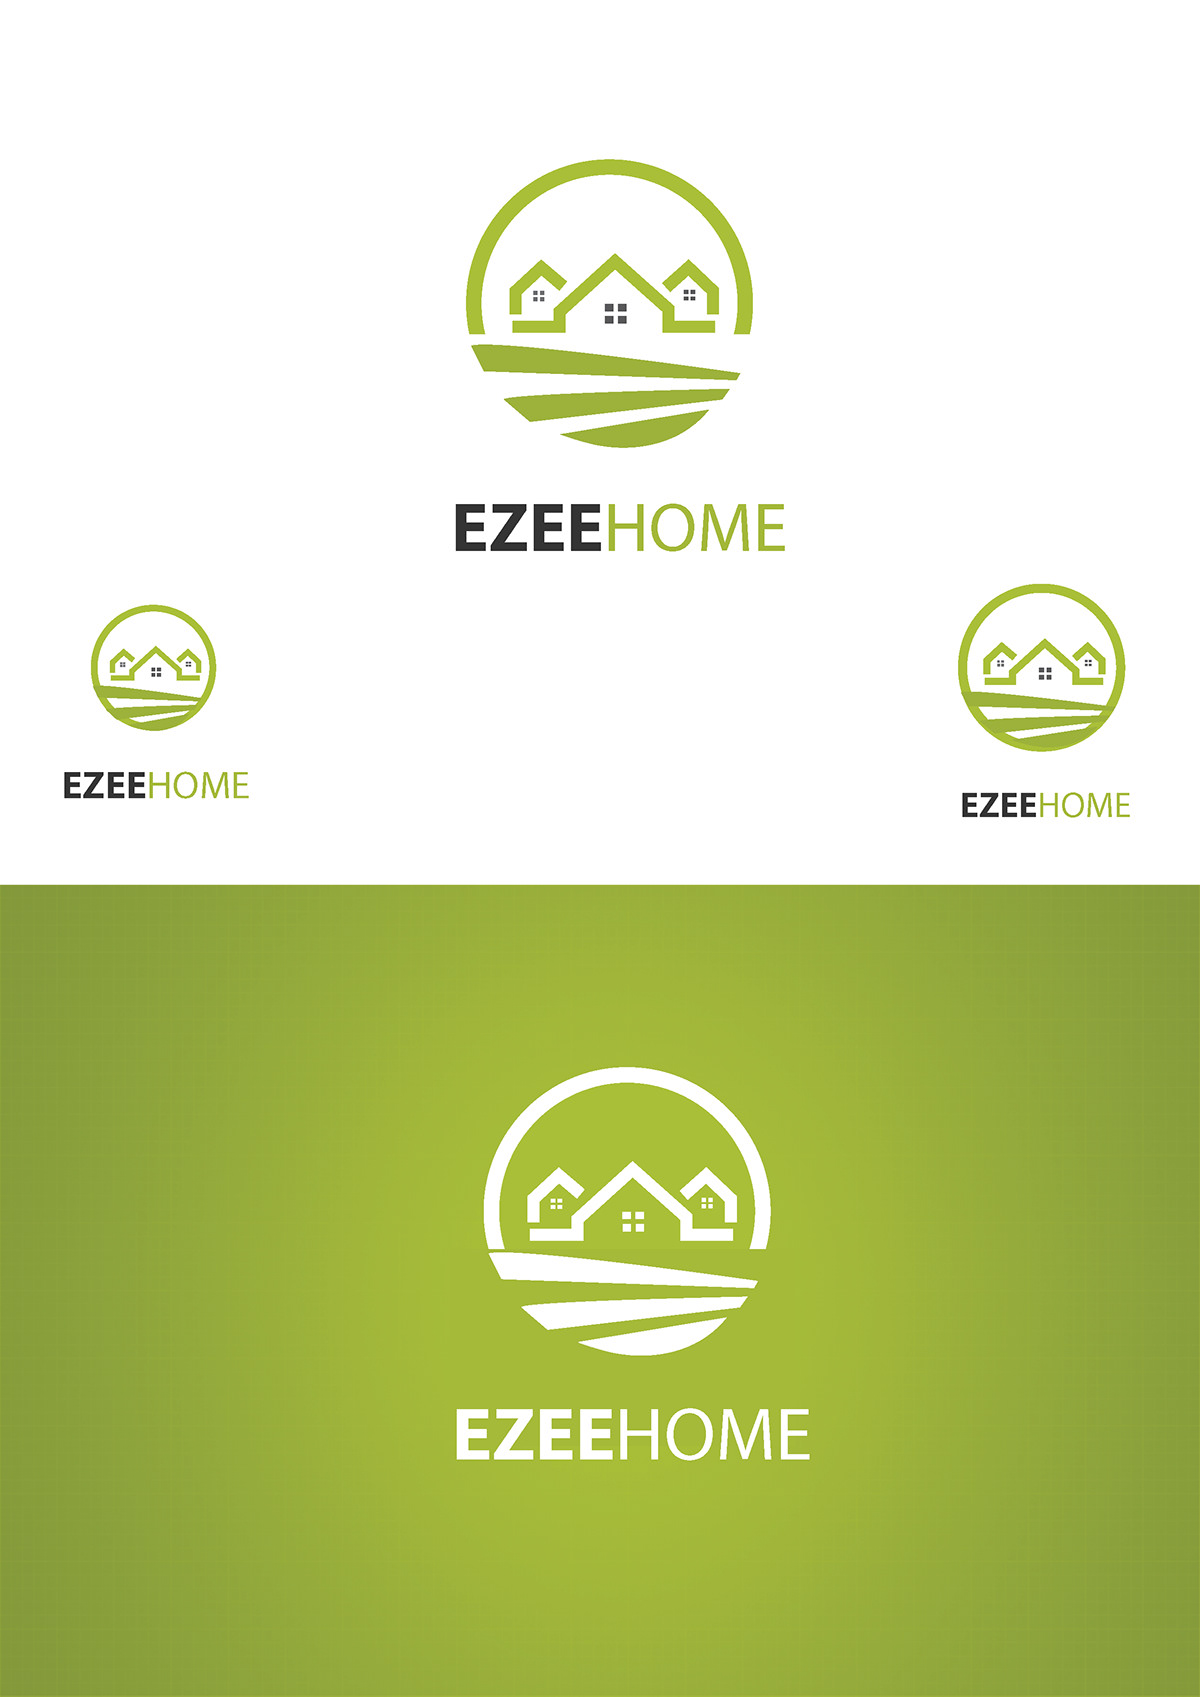 EzeeHOME (logo) logo ezee home under construction green